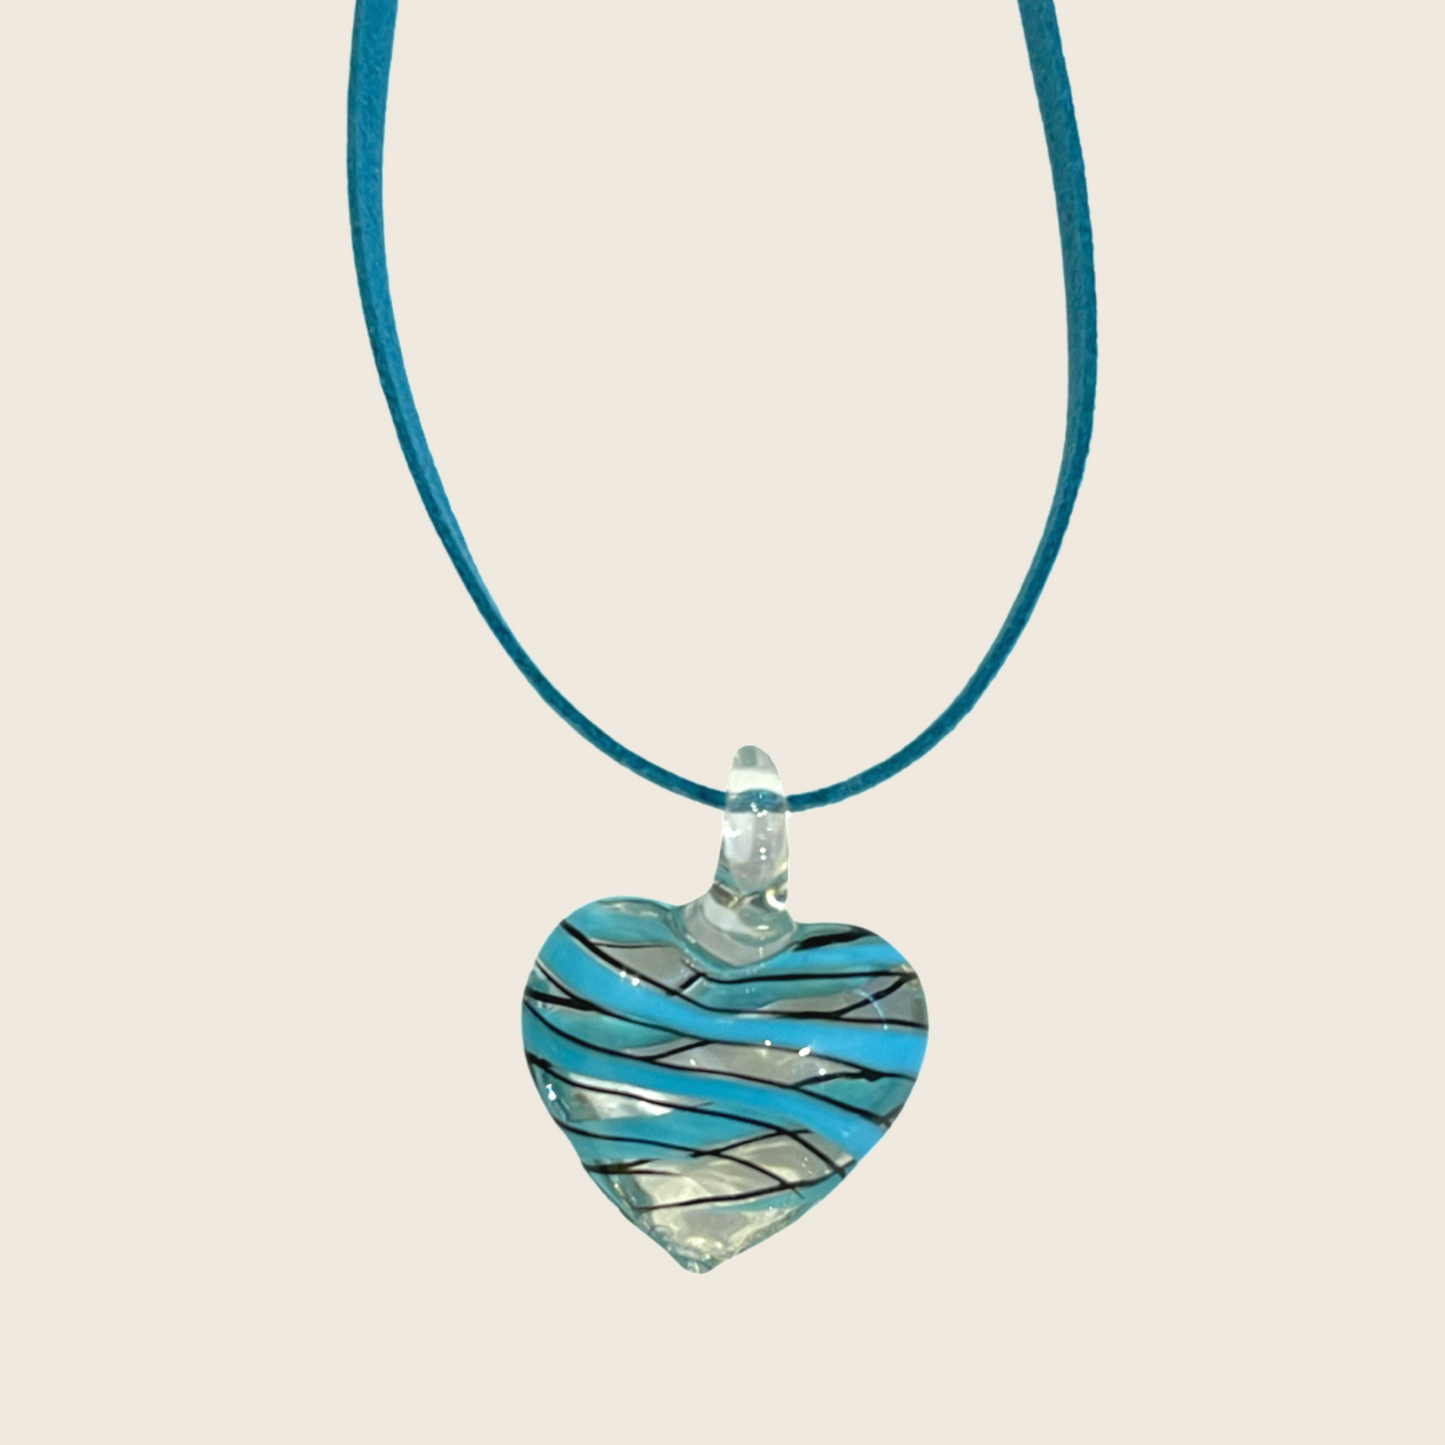 Striped Heart Glass Necklace - Lemon Lua Striped Heart Glass Necklace Lemon Lua Blue / Black Lemon Lua Striped Heart Glass Necklace Striped Heart Glass Necklace